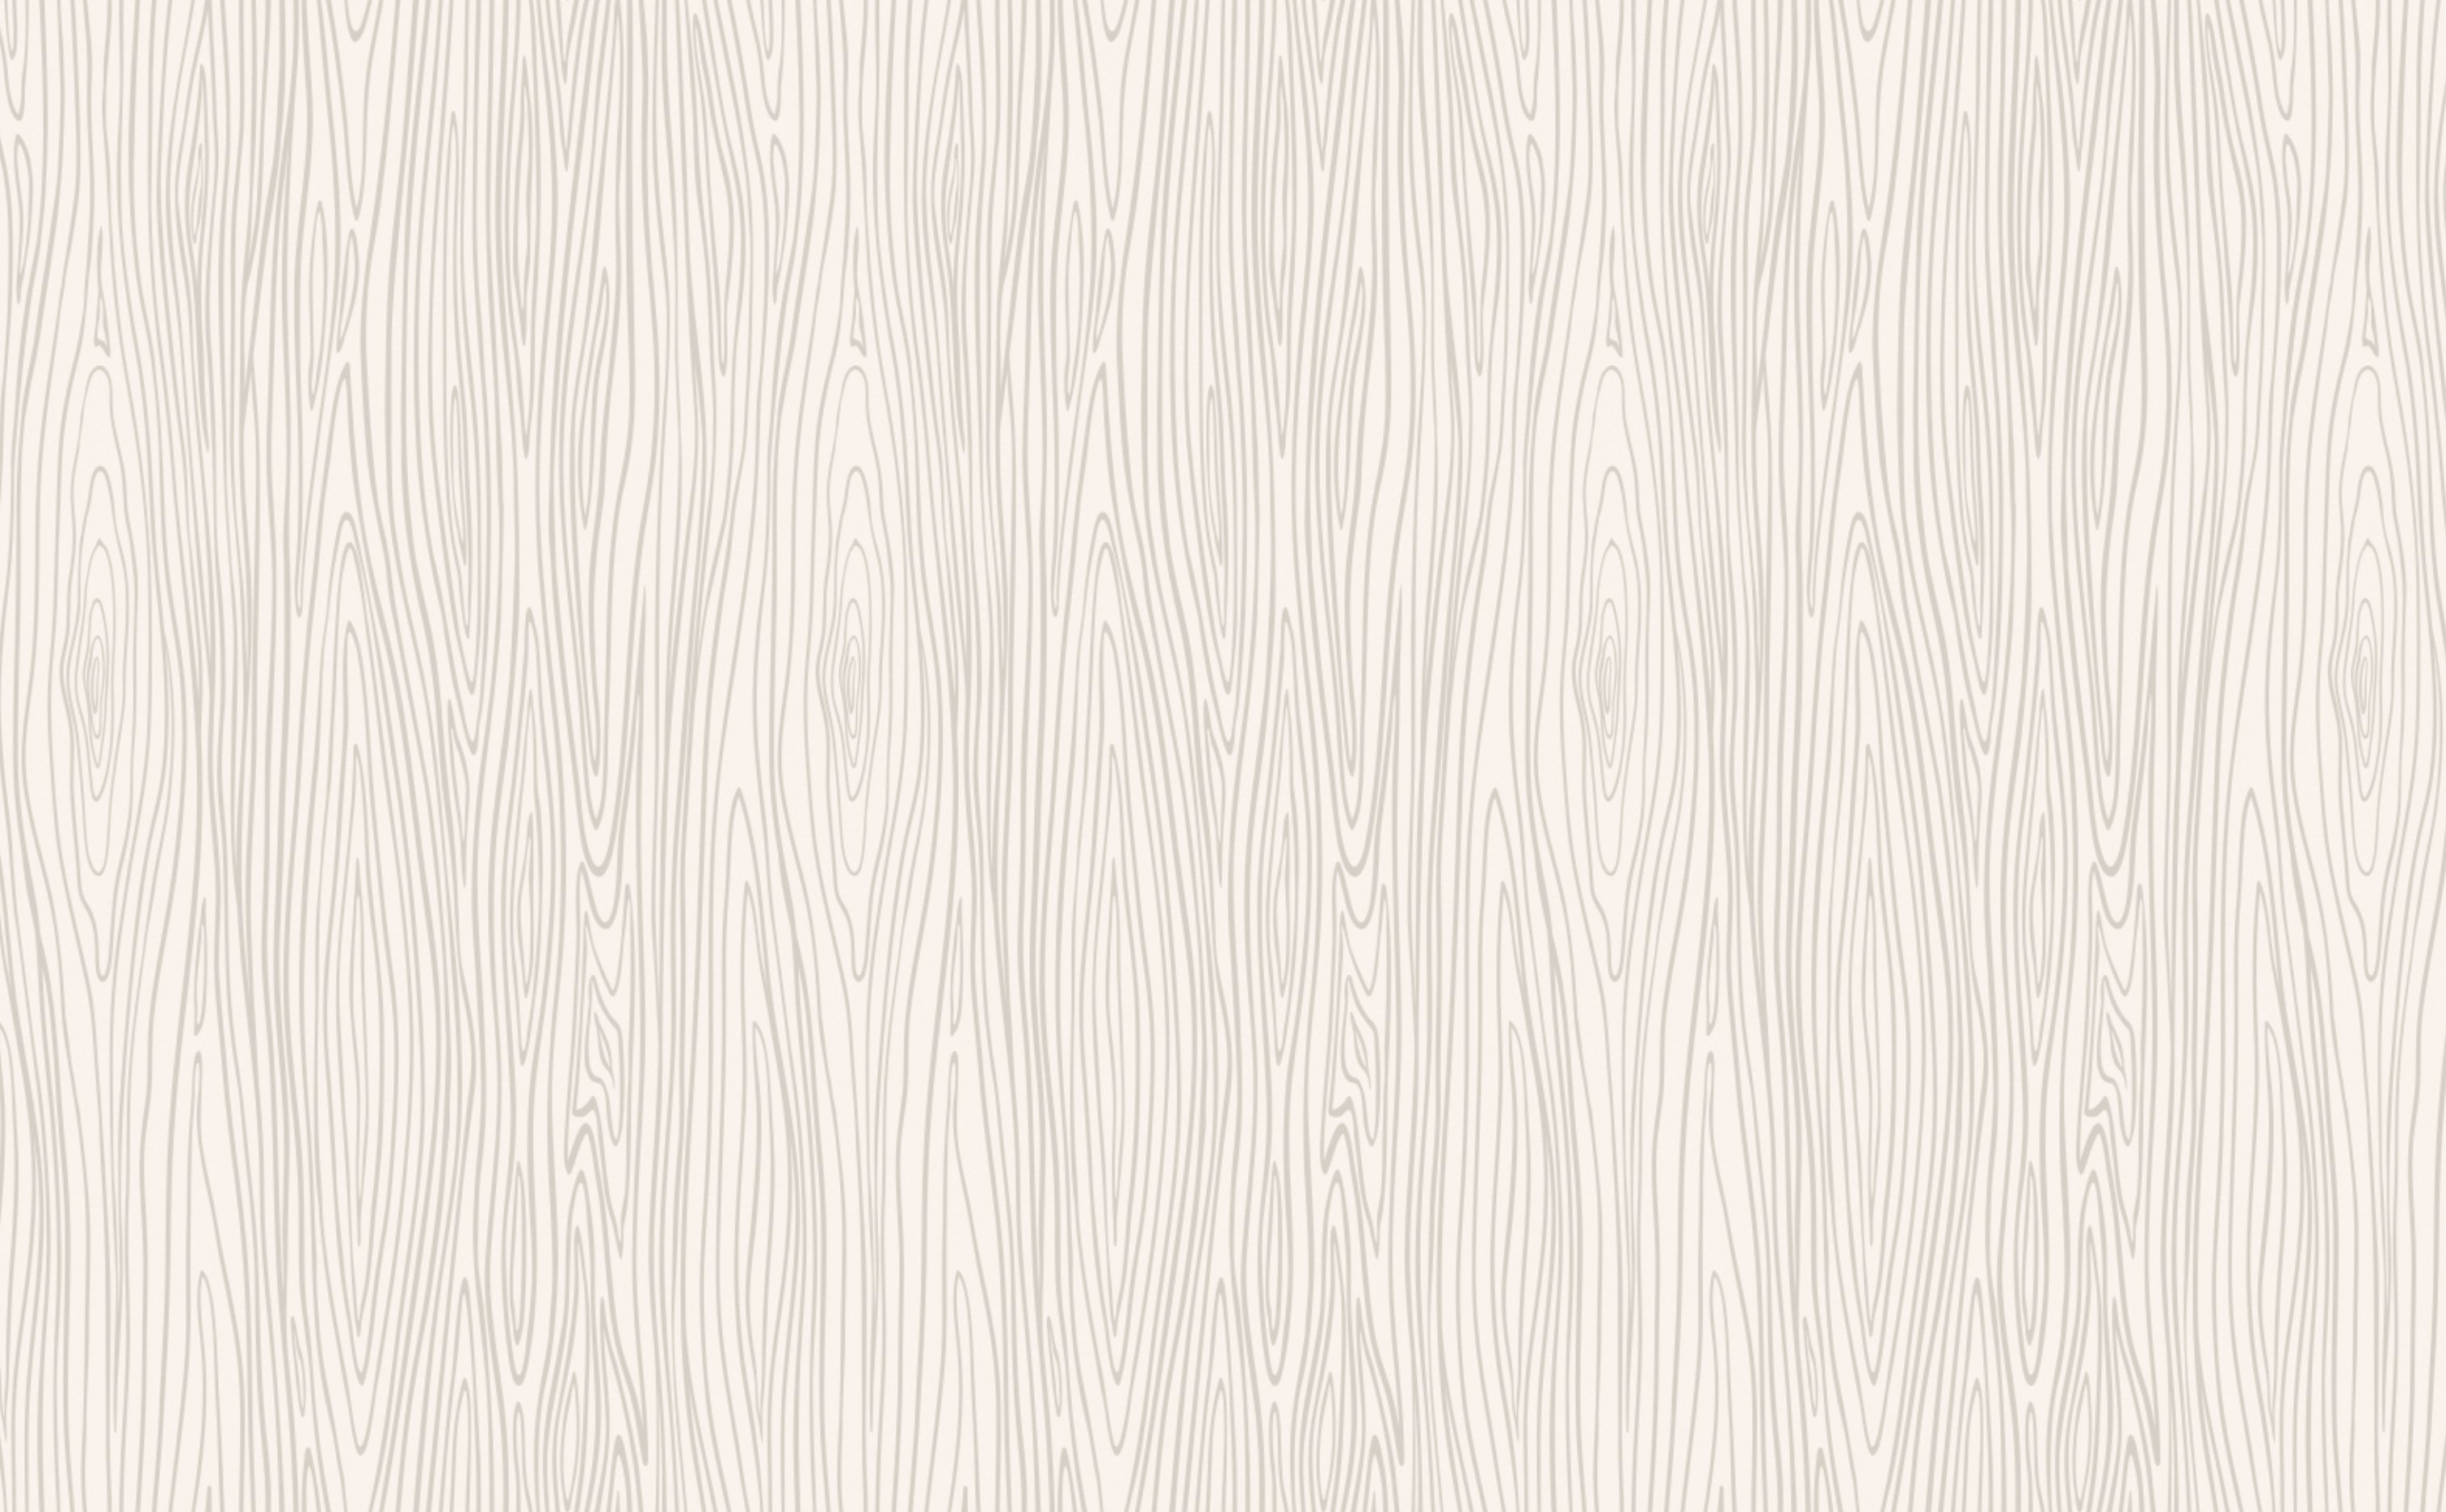 Faux Wood Grain Wallpaper for Walls. White Wood Grain